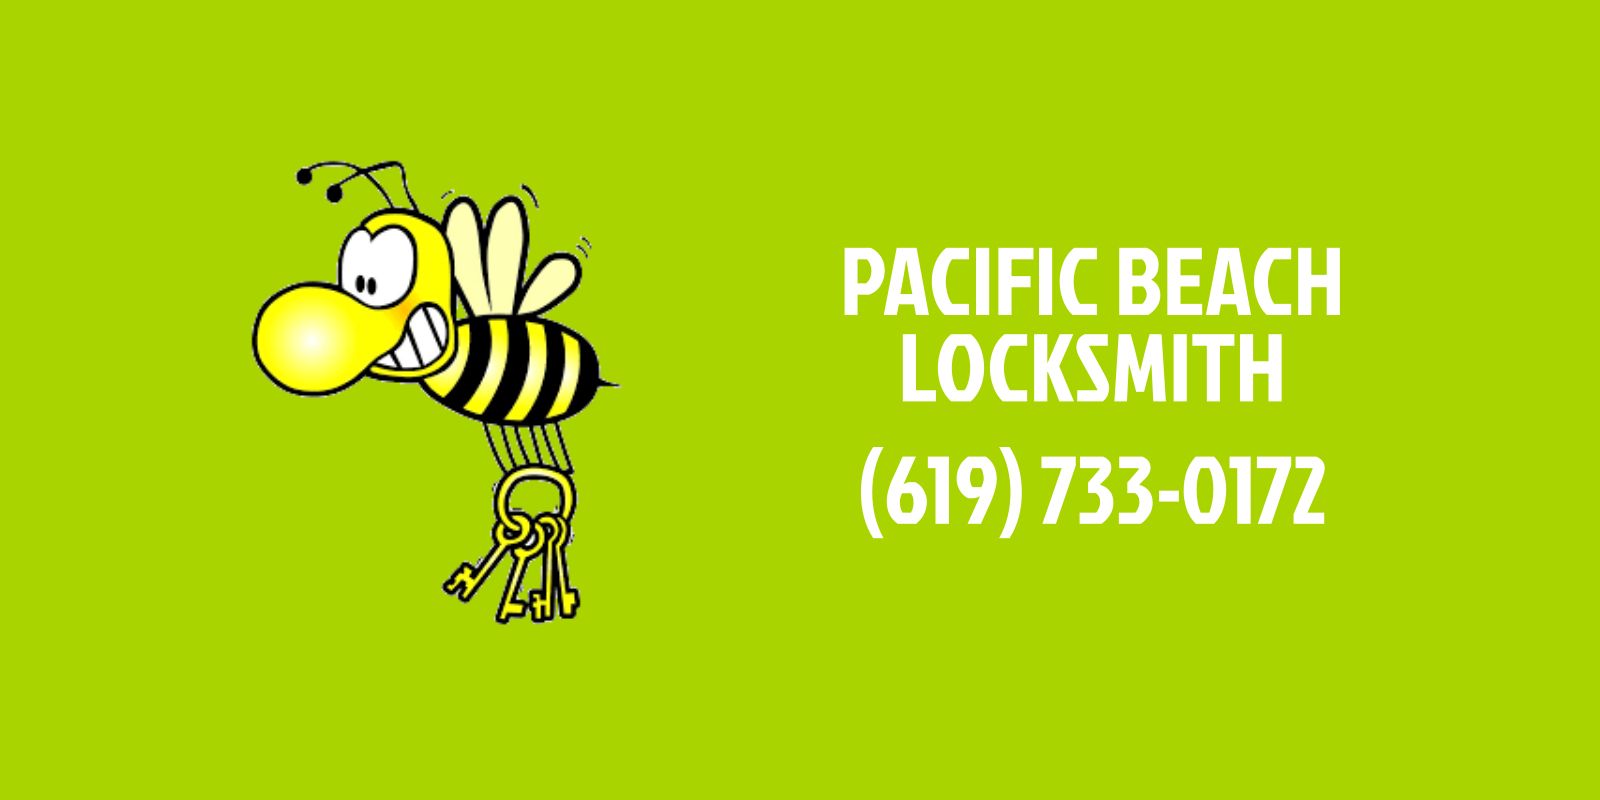 Pacific Beach Locksmith  San Diego PB Locksmith  92109 Locksmith